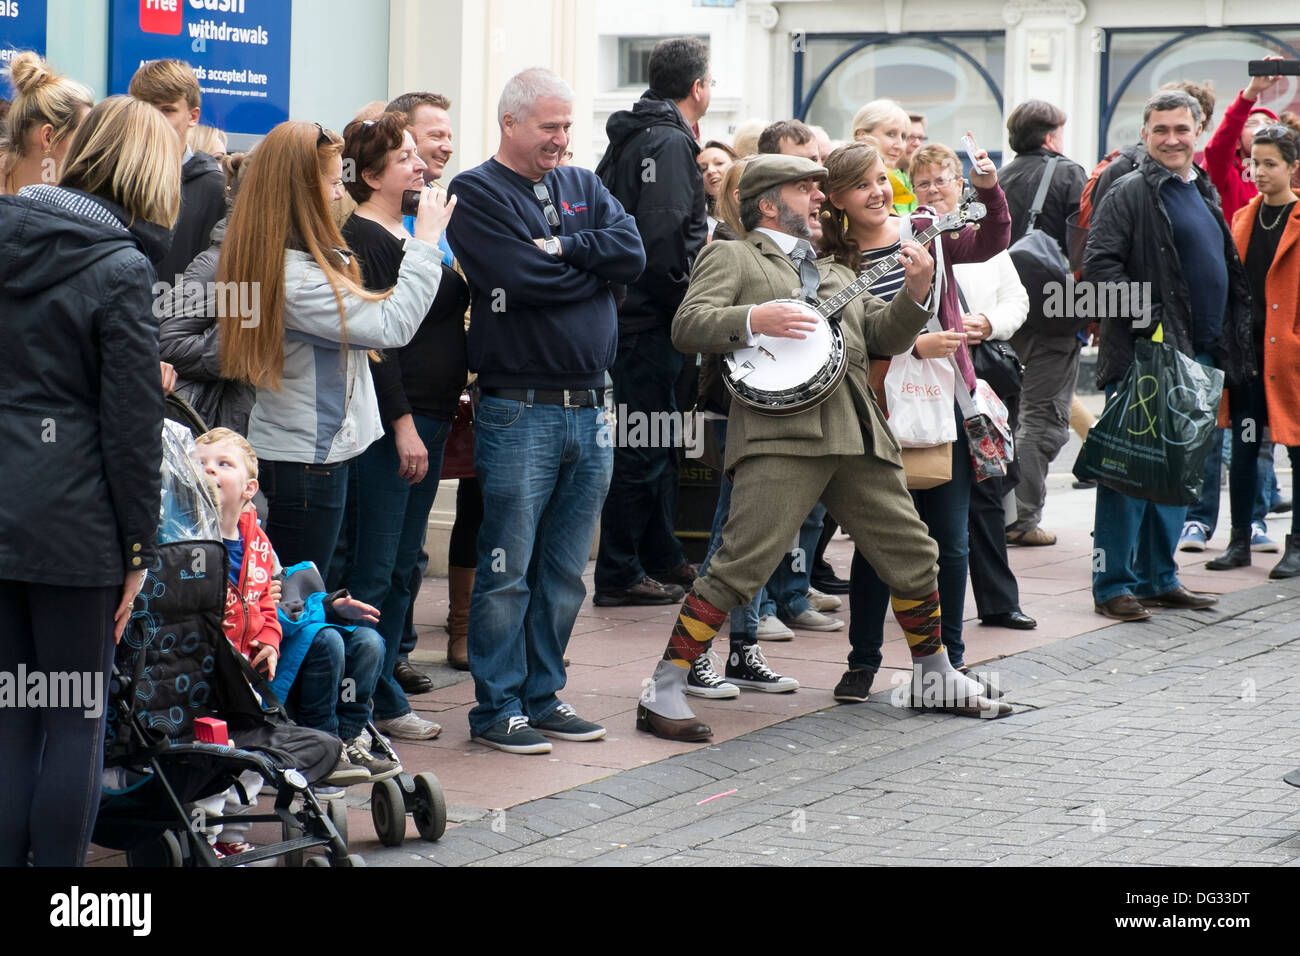 Street performers in brighton Stock Photo